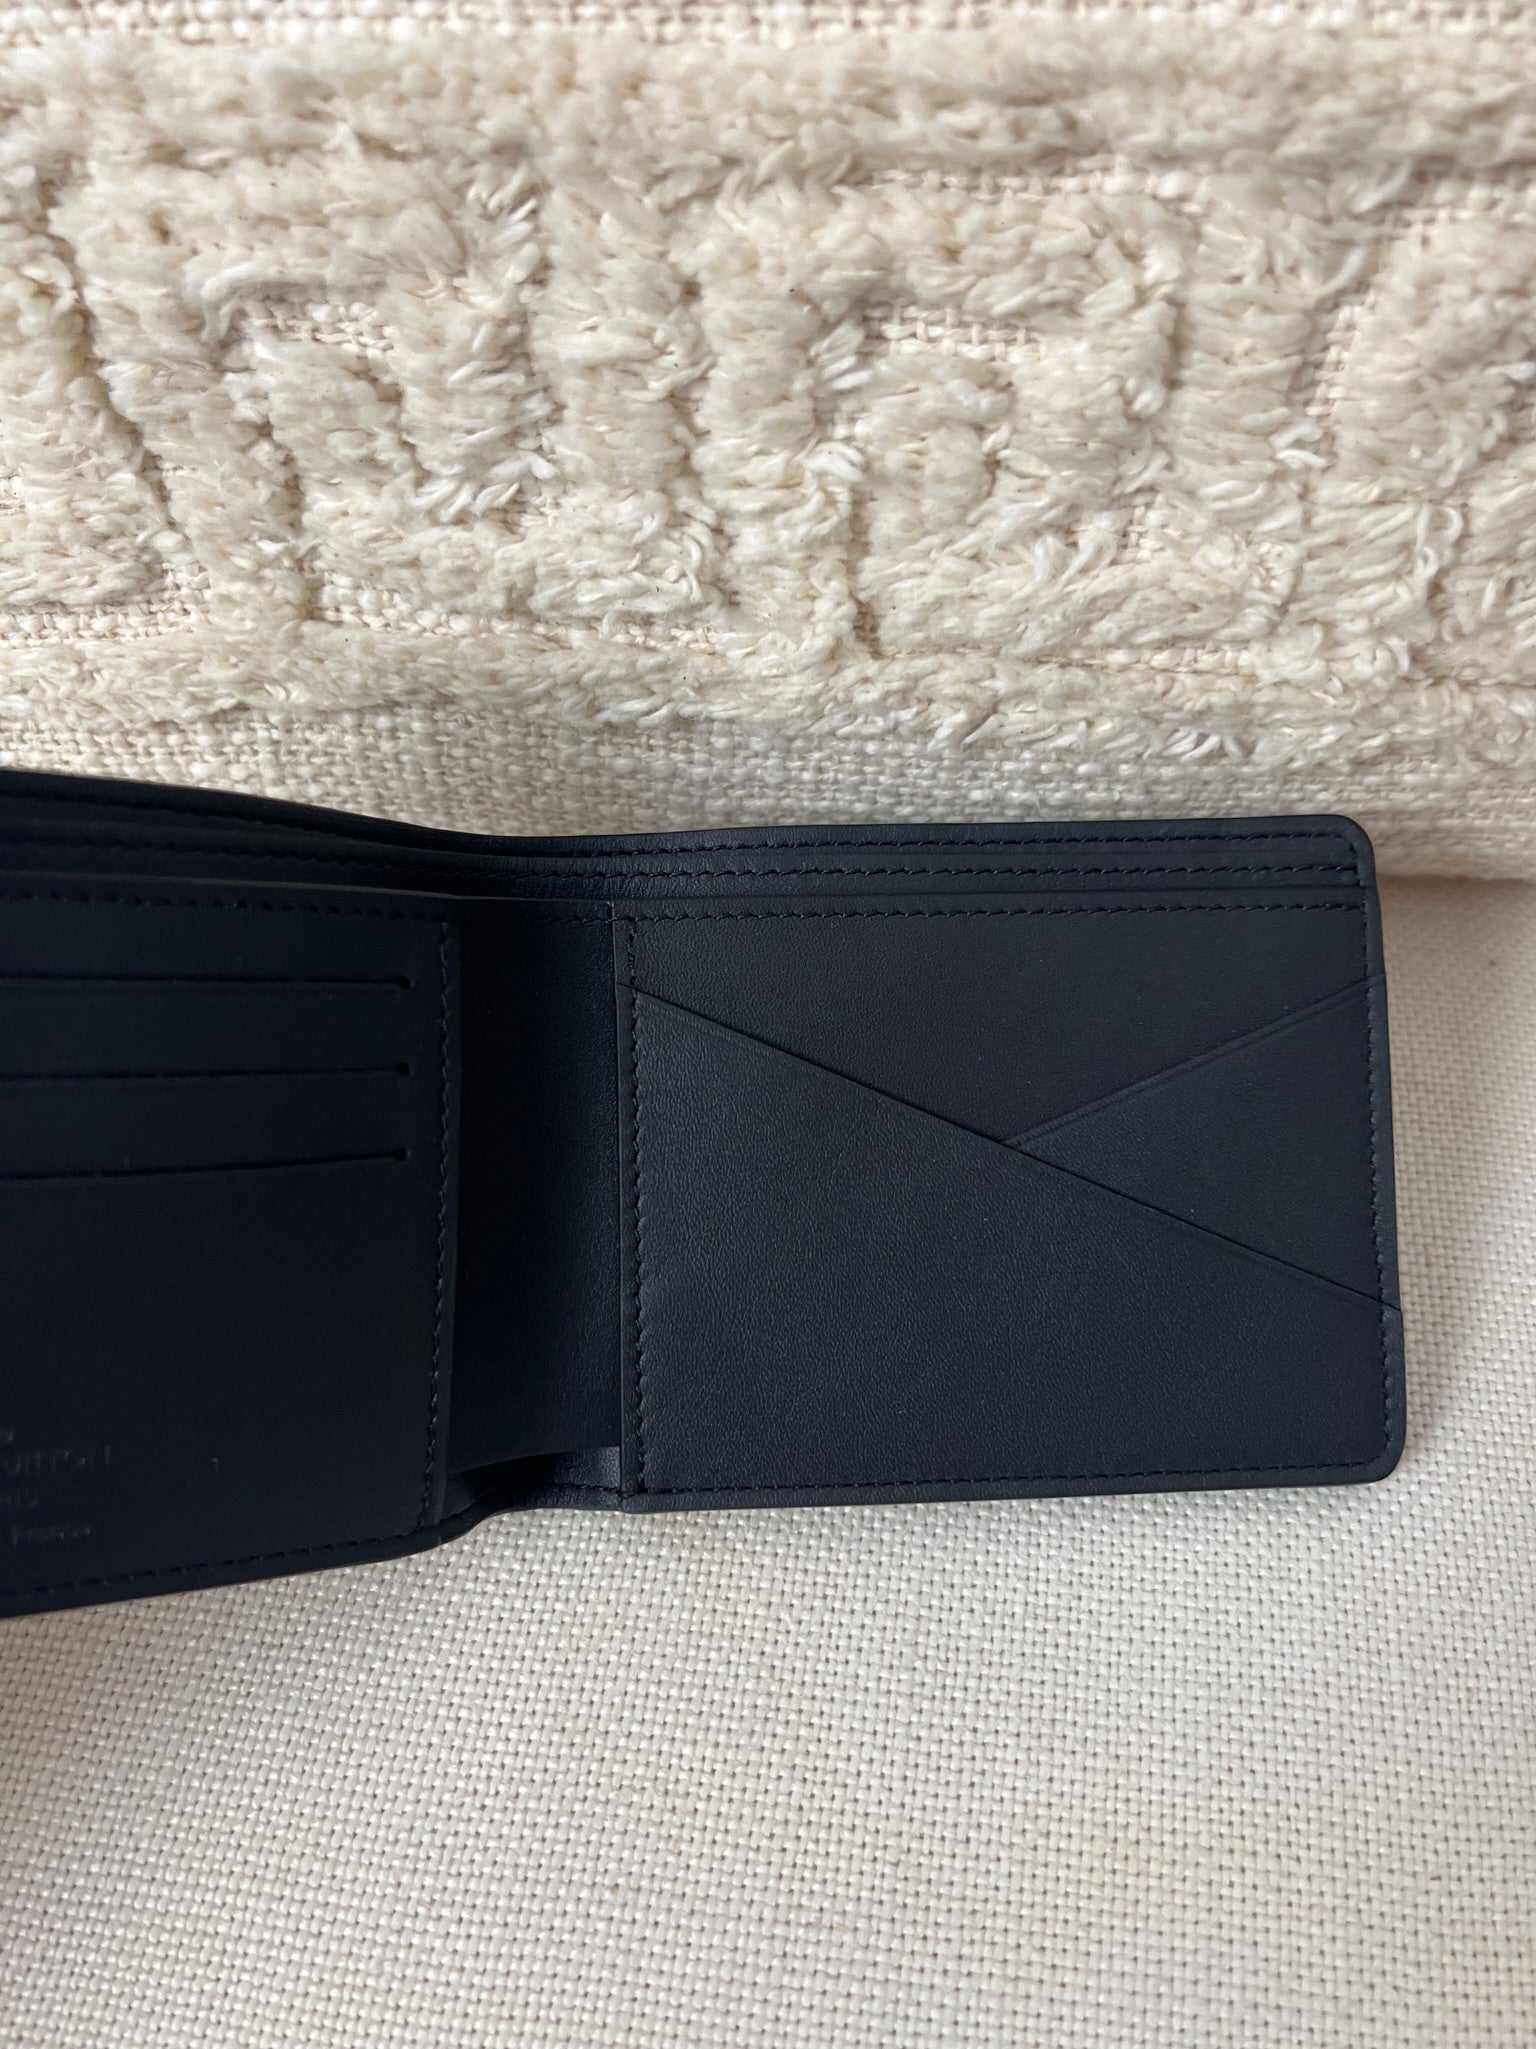 Brand New Louis Vuitton Hybrid Wallet Black Monogram Shadow